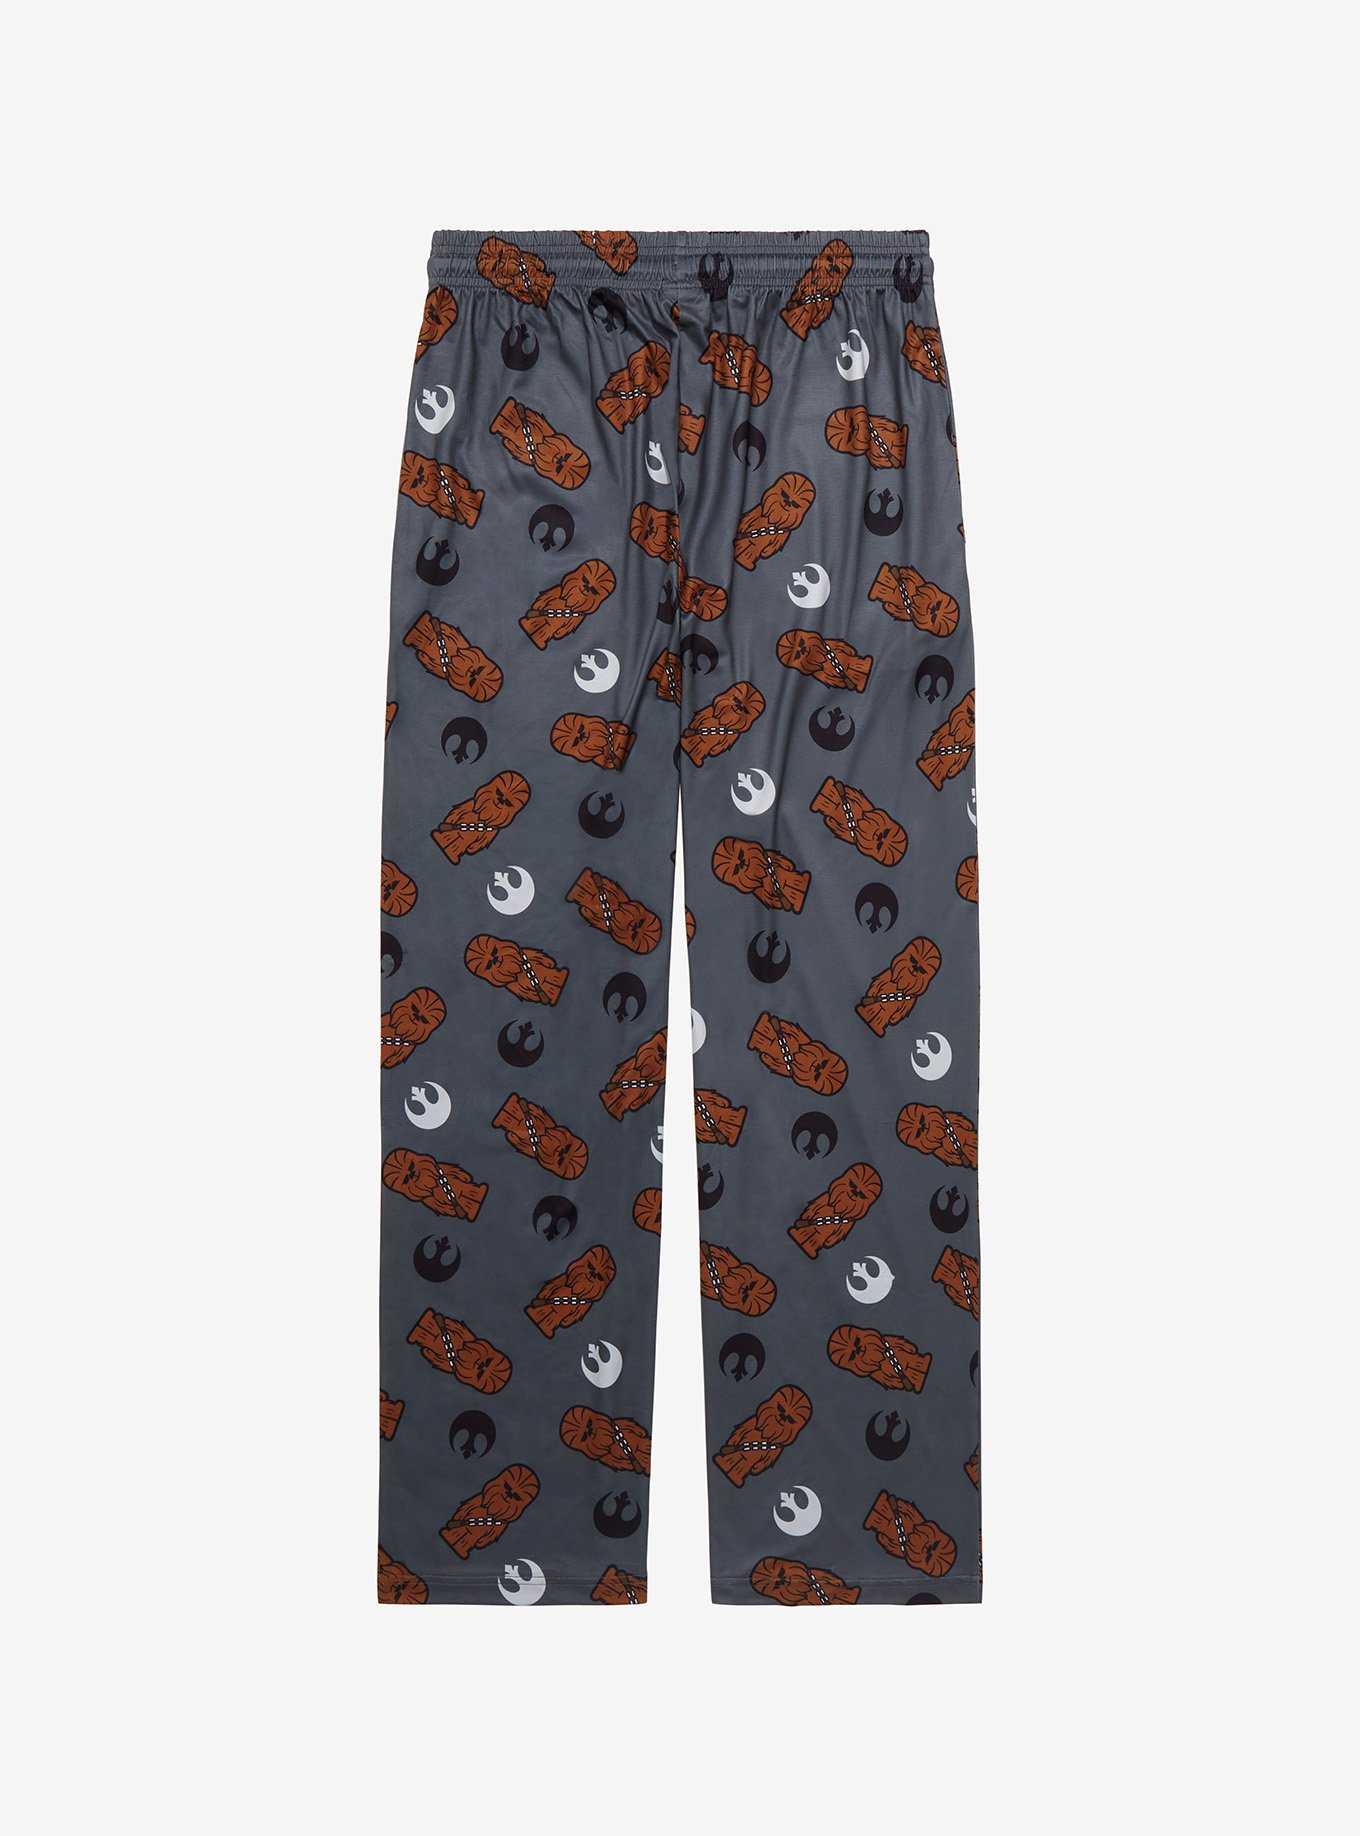 Star Wars Chewbacca & Rebel Logo Allover Print Sleep Pants - BoxLunch Exclusive, , hi-res